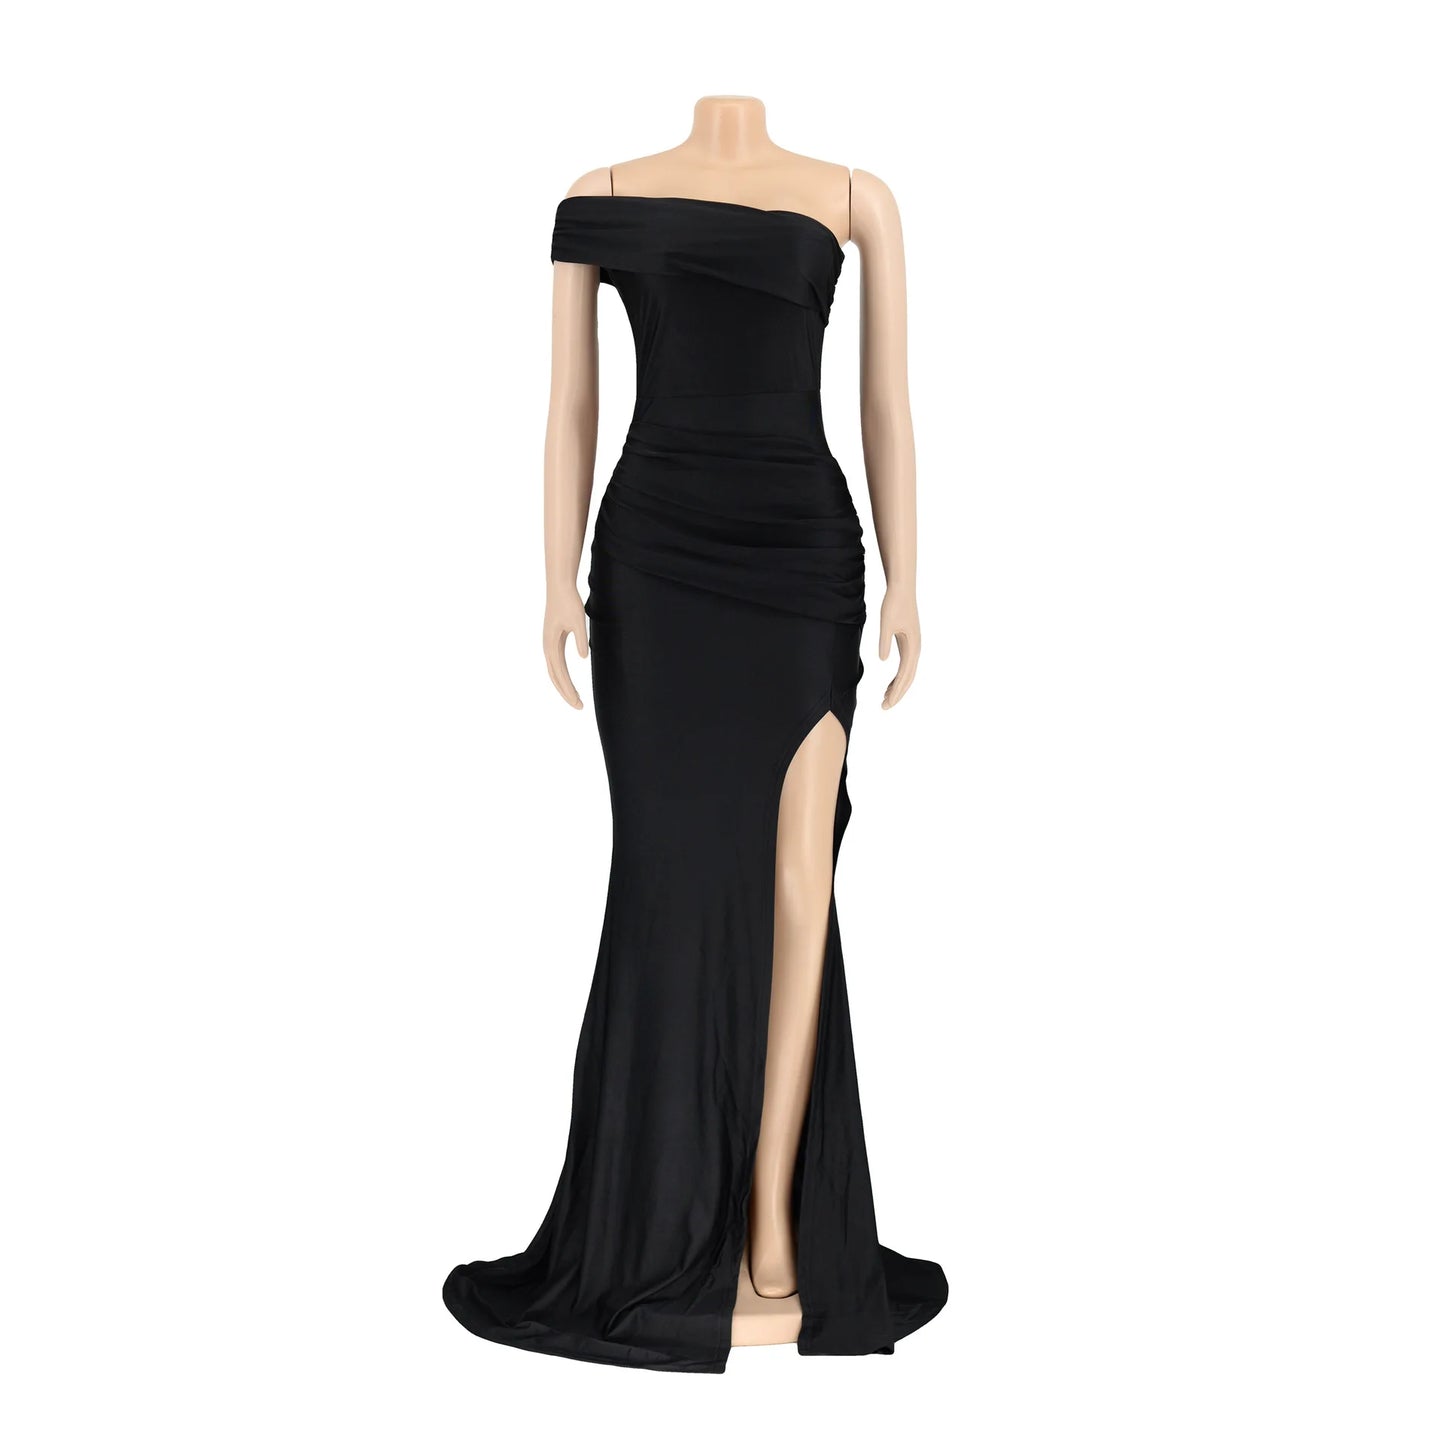 Women's Elegant Temperament Fashion Solid Color Dress Evening Gown Sleeveless One Line Oblique Shoulder Slit Sexy Dresses